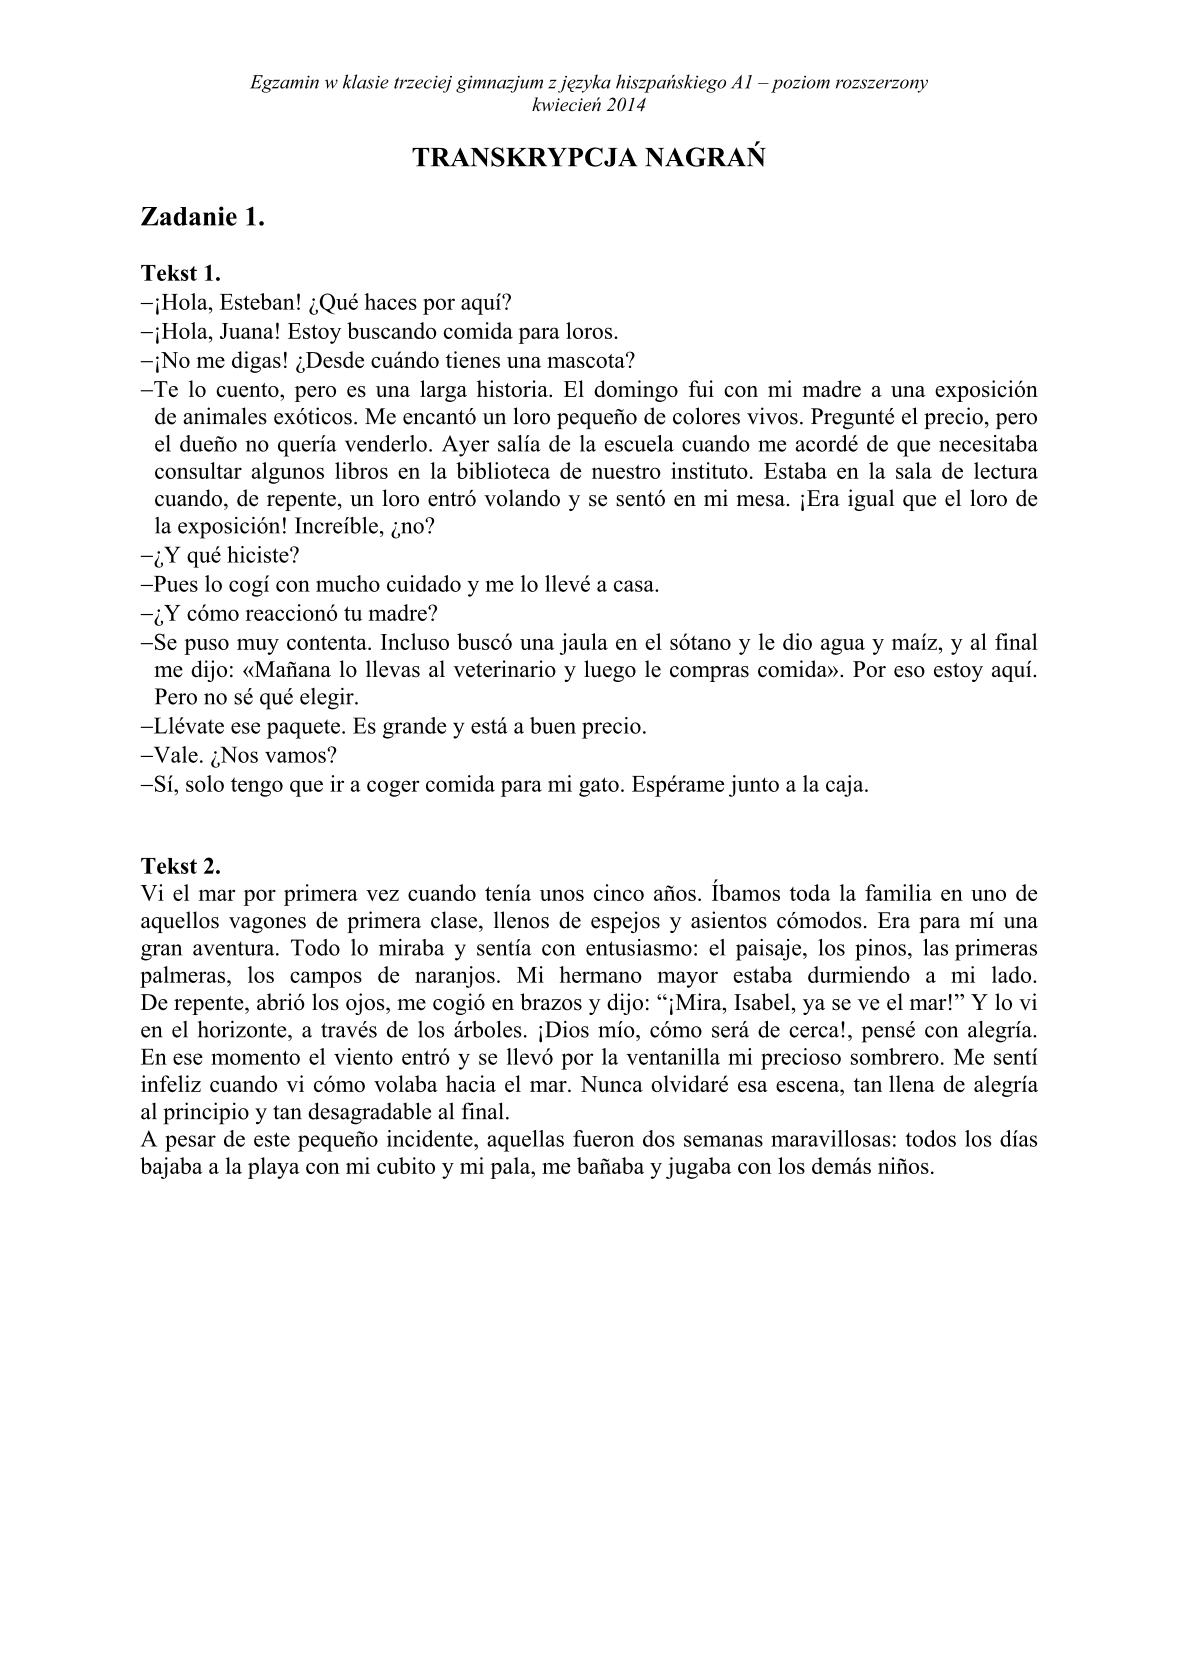 transkrypcja-hiszpanski-poziom-rozszerzony-egzamin-gimnazjalny-25.04.2014-1